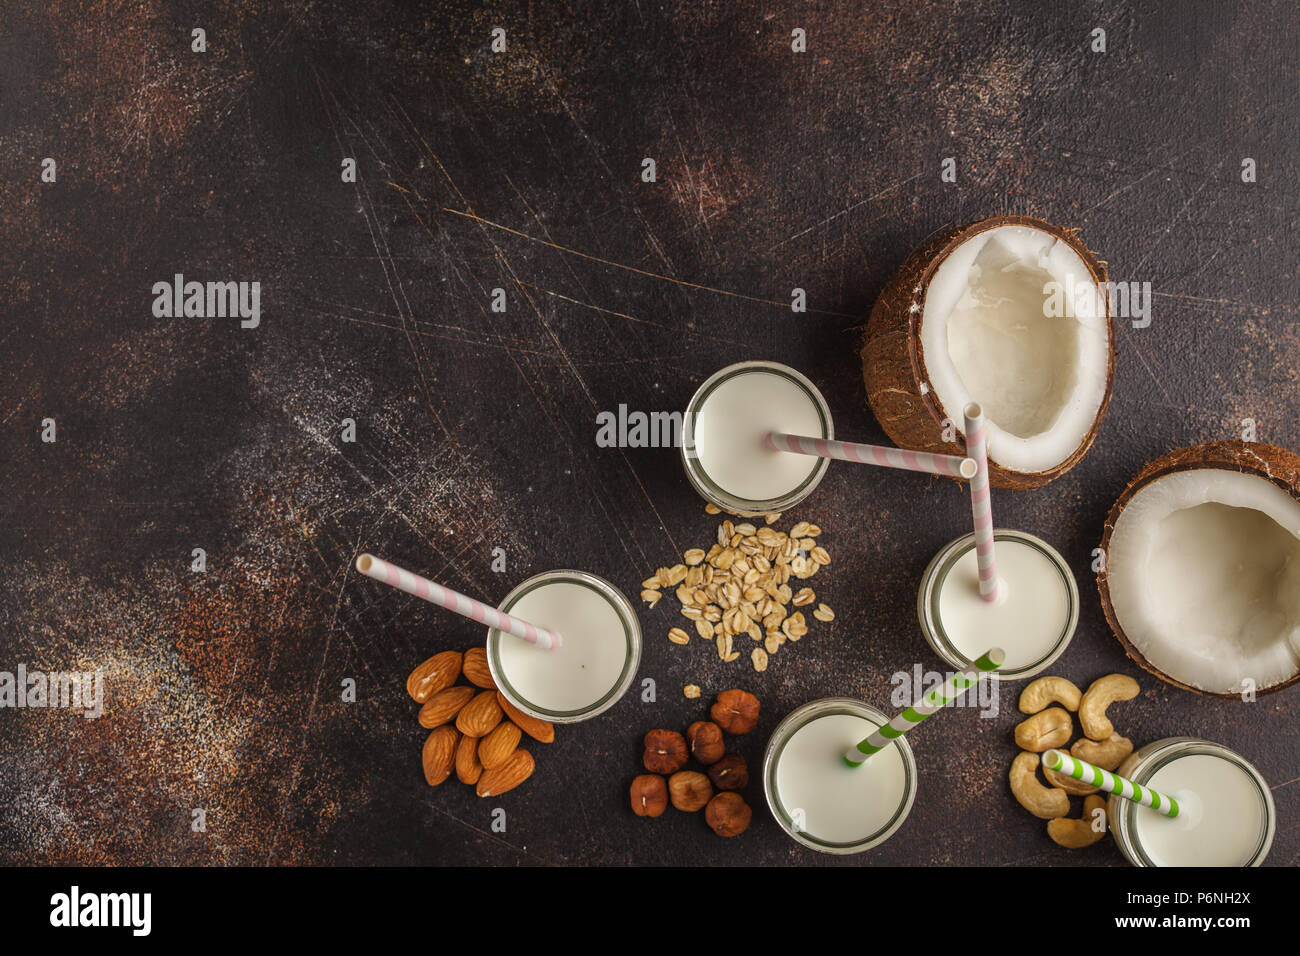 Vegan alternative nut milk in glass bottles on a dark background, copy space. Healthy vegan food concept. Stock Photo